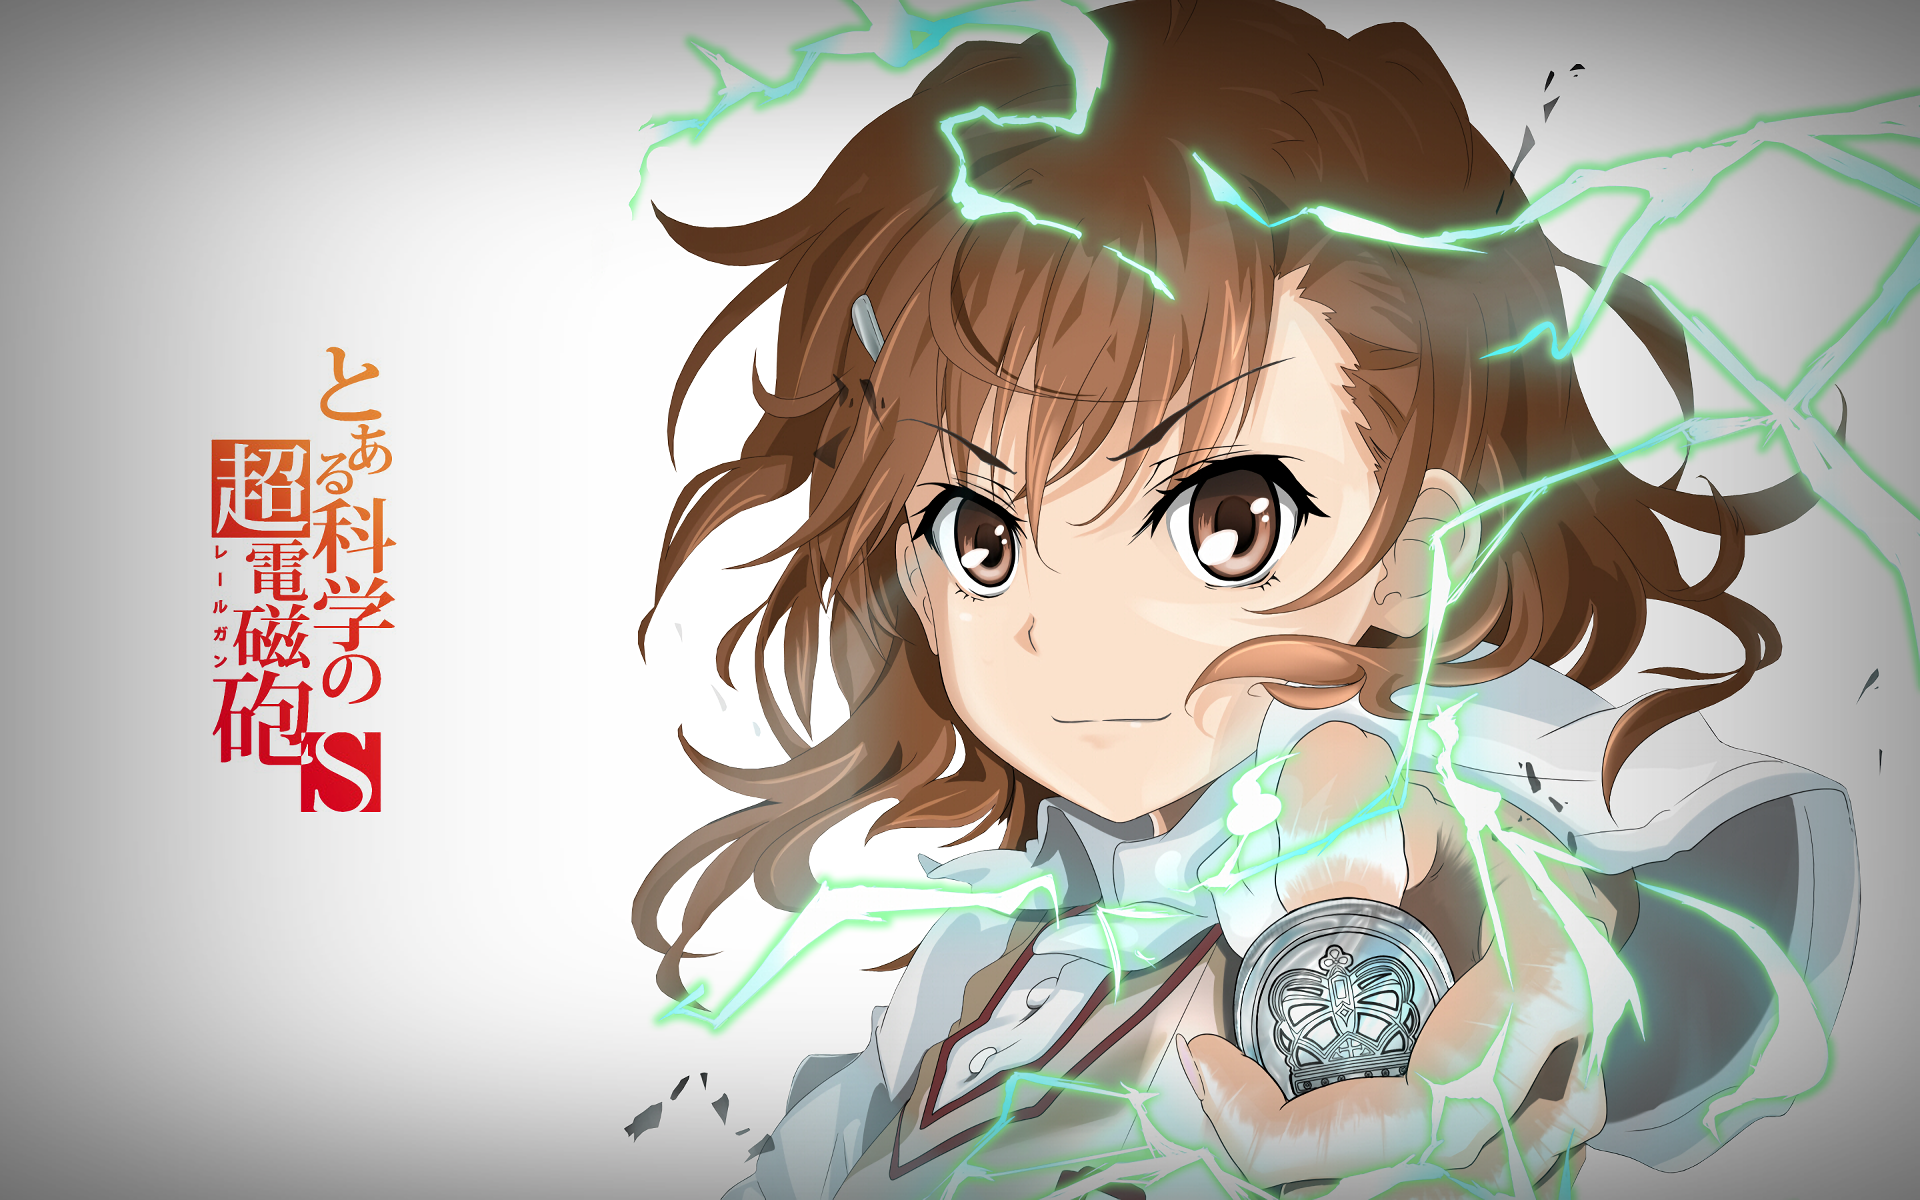 Anime Date A Live HD Wallpaper by kurosakideer